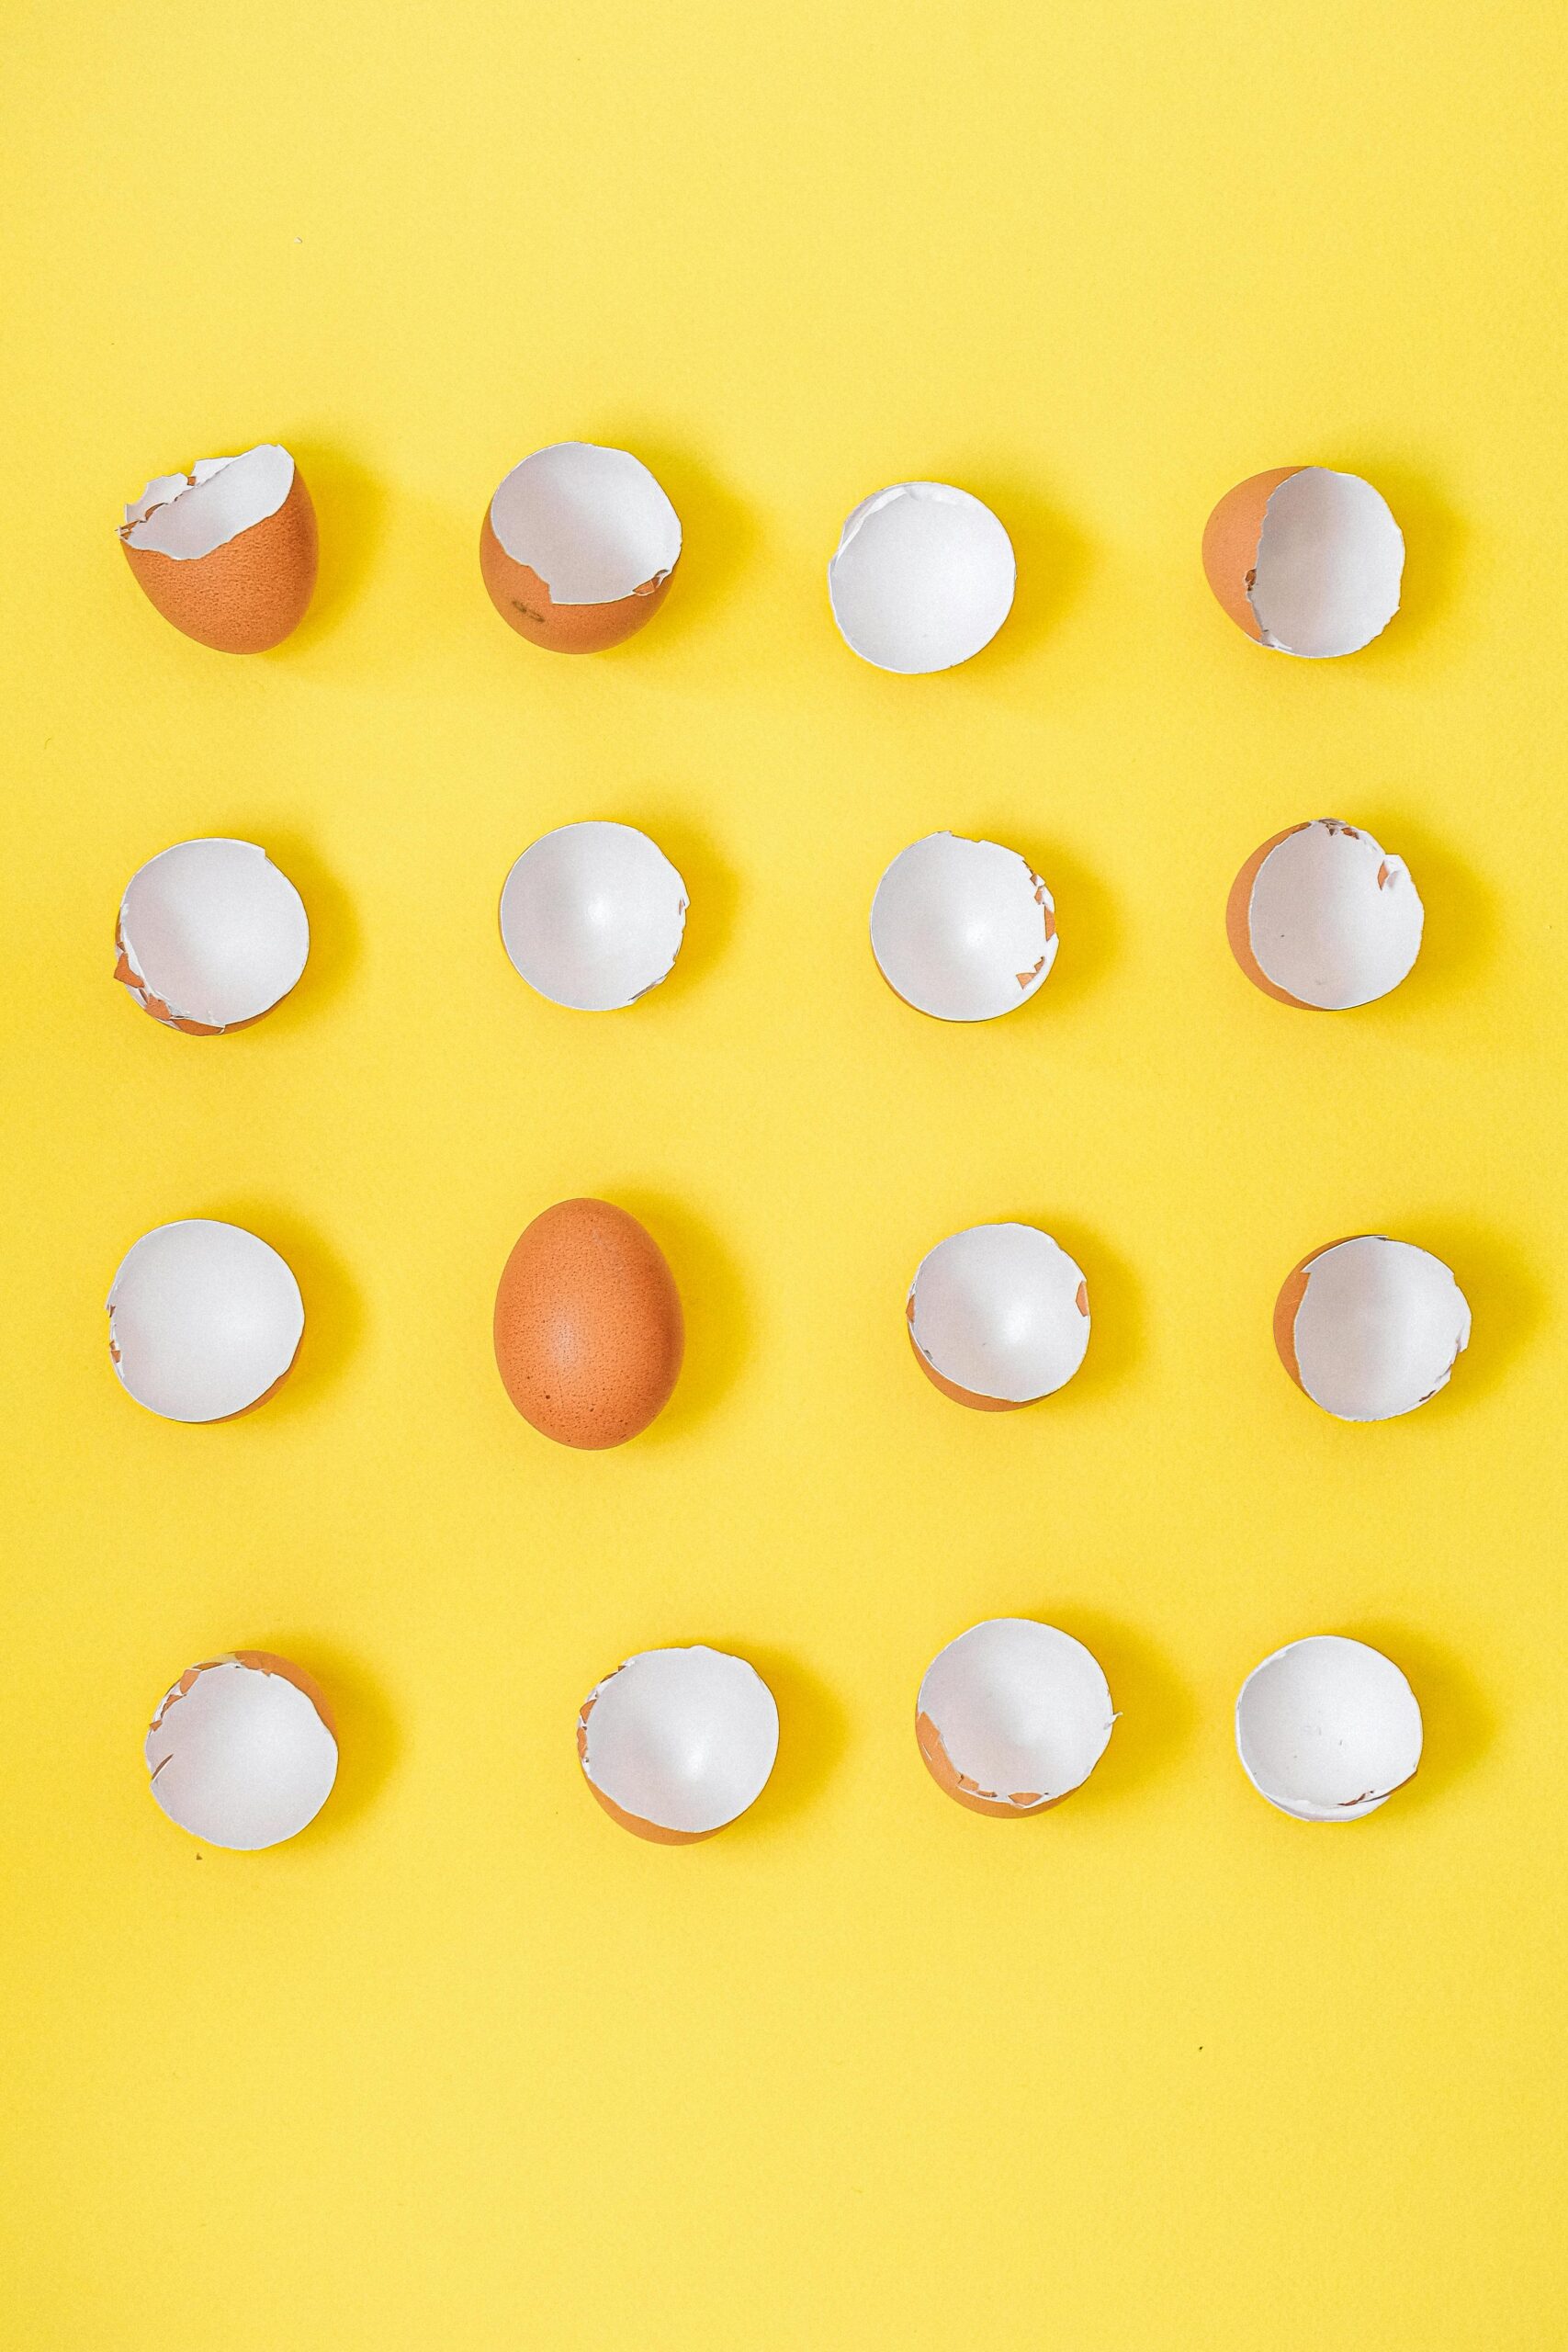 Eggshells on yellow background